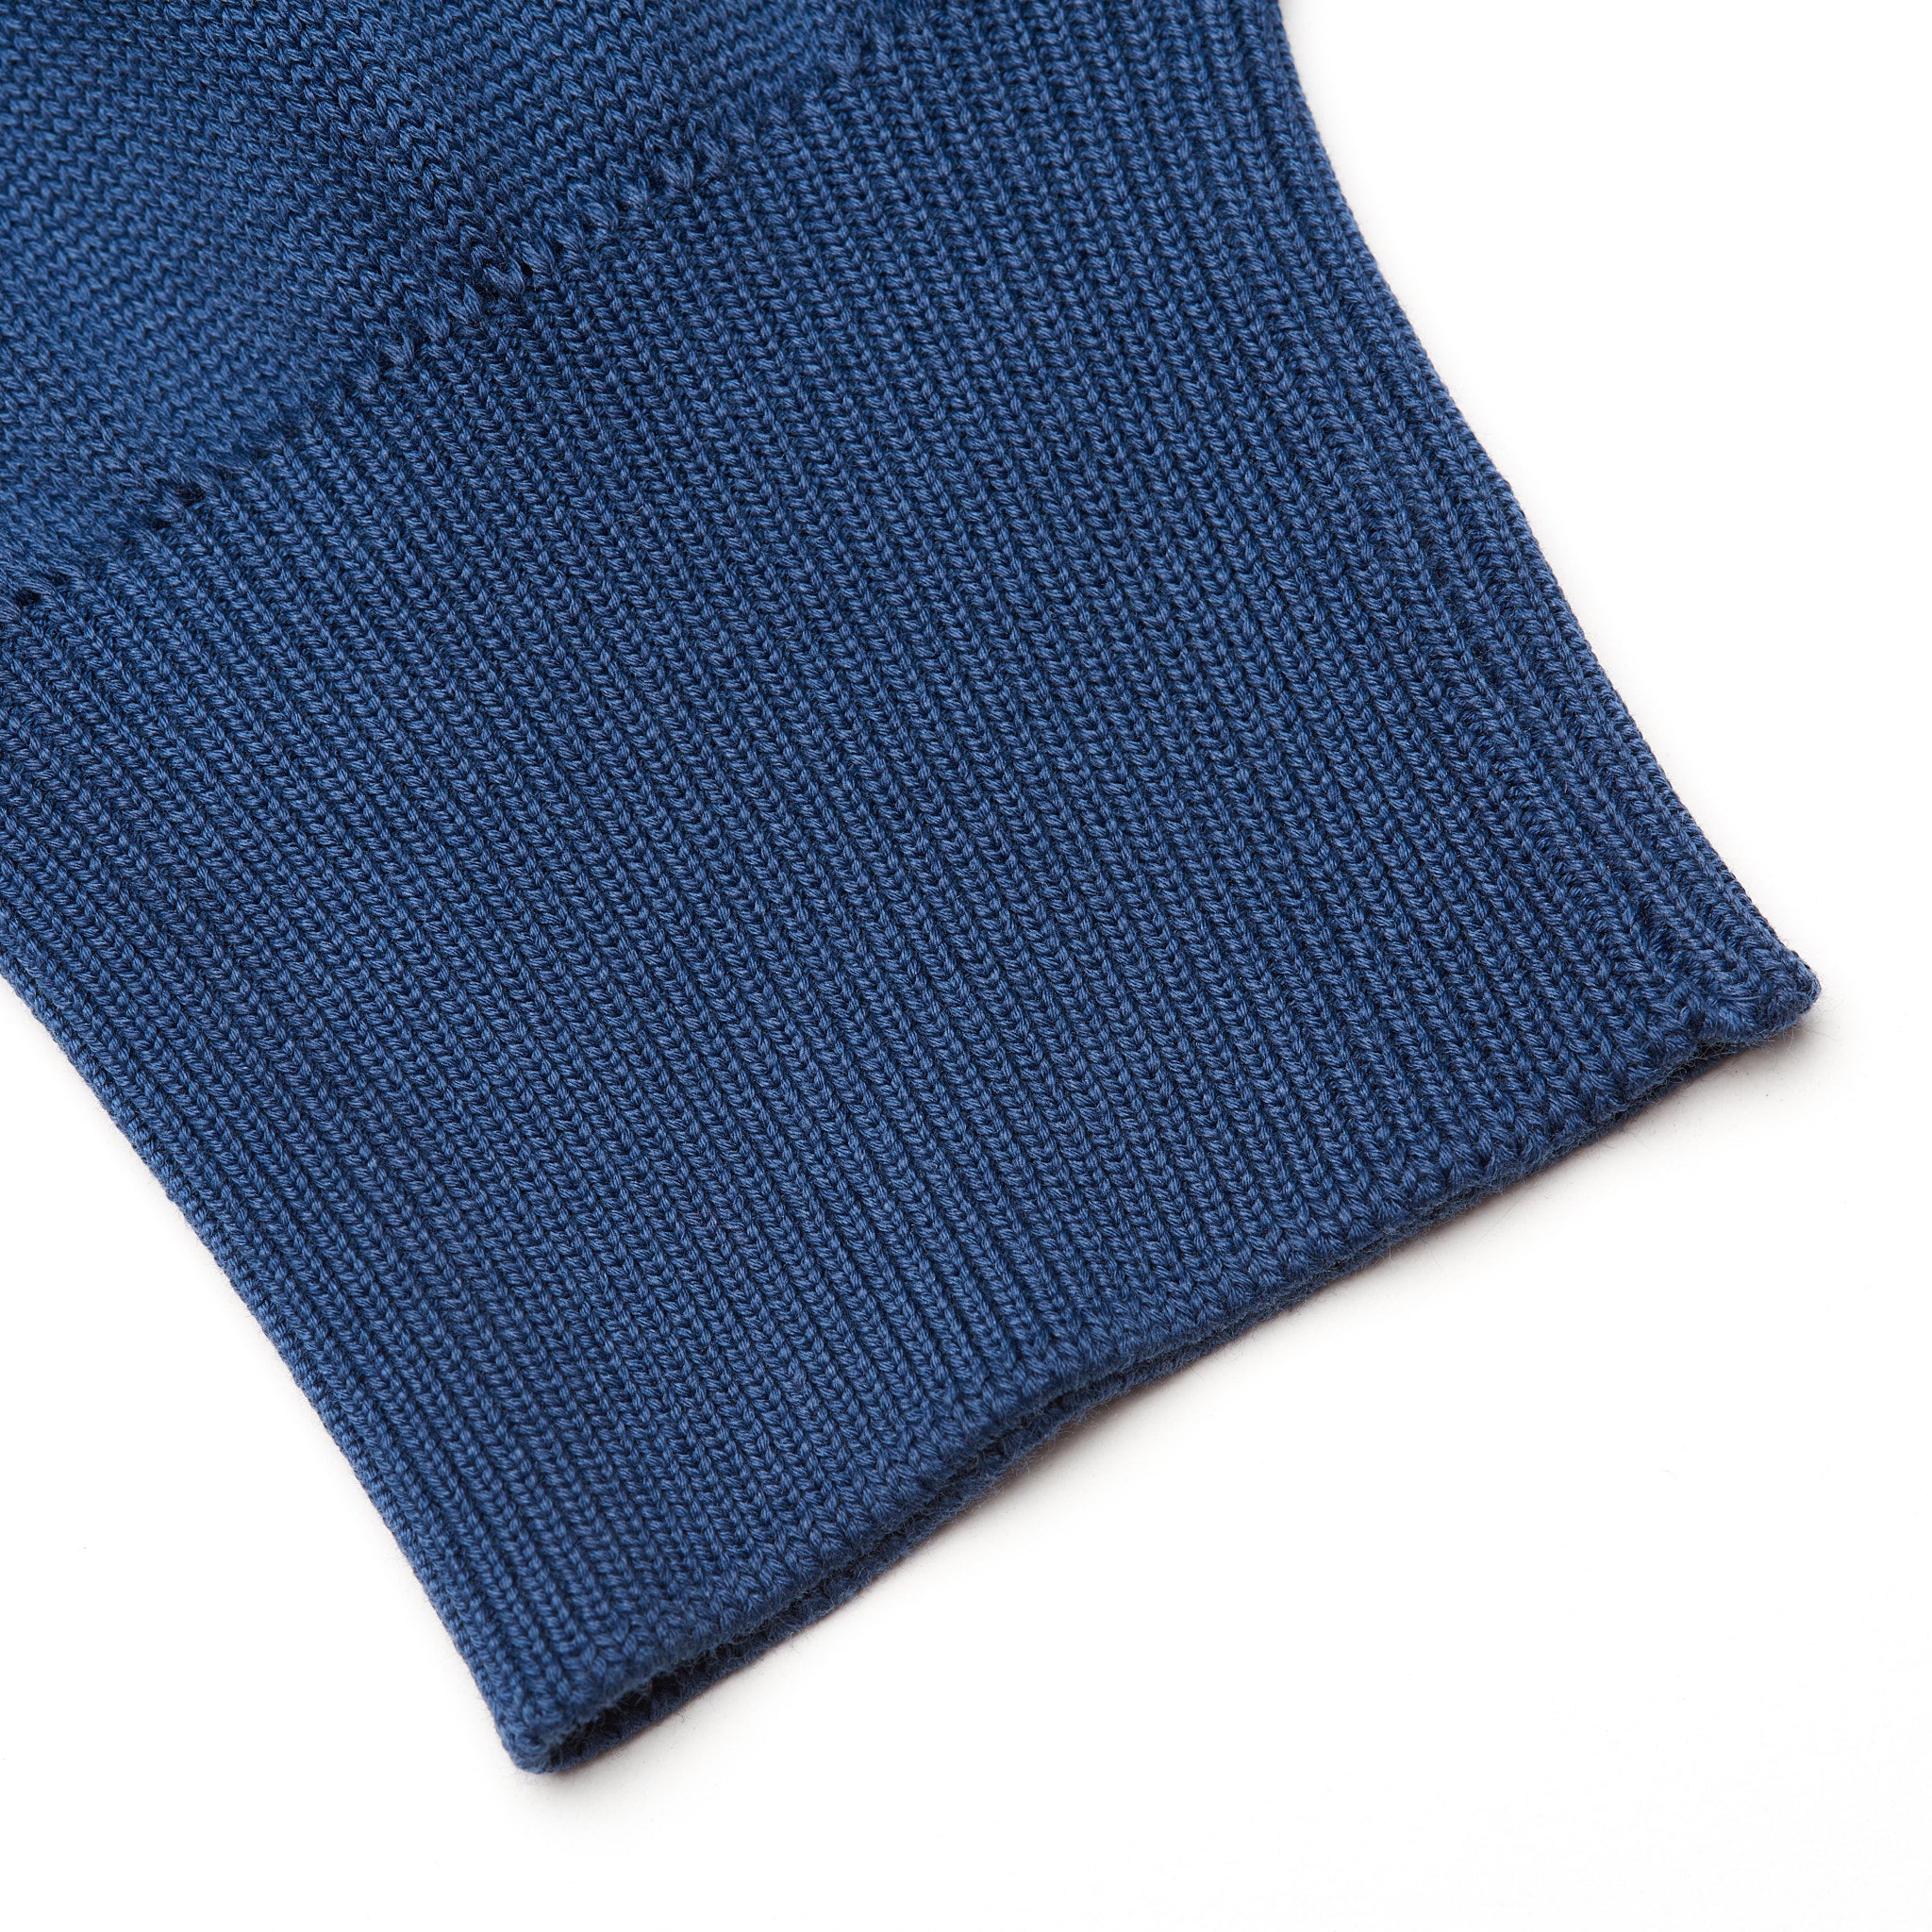 FEDELI Blue Cotton Ribbed Crewneck Sweater NEW Slim Fit FEDELI